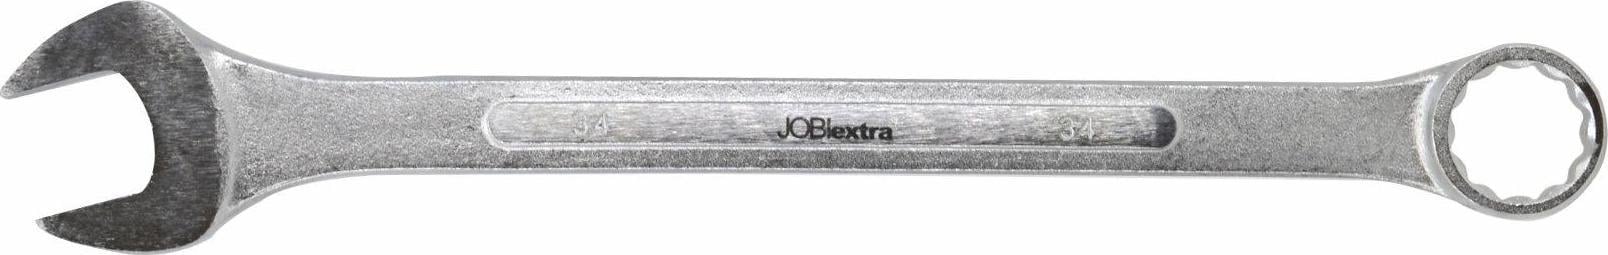 JOBIextra CHEIE COMBINATA JOBI EXTRA 34mm